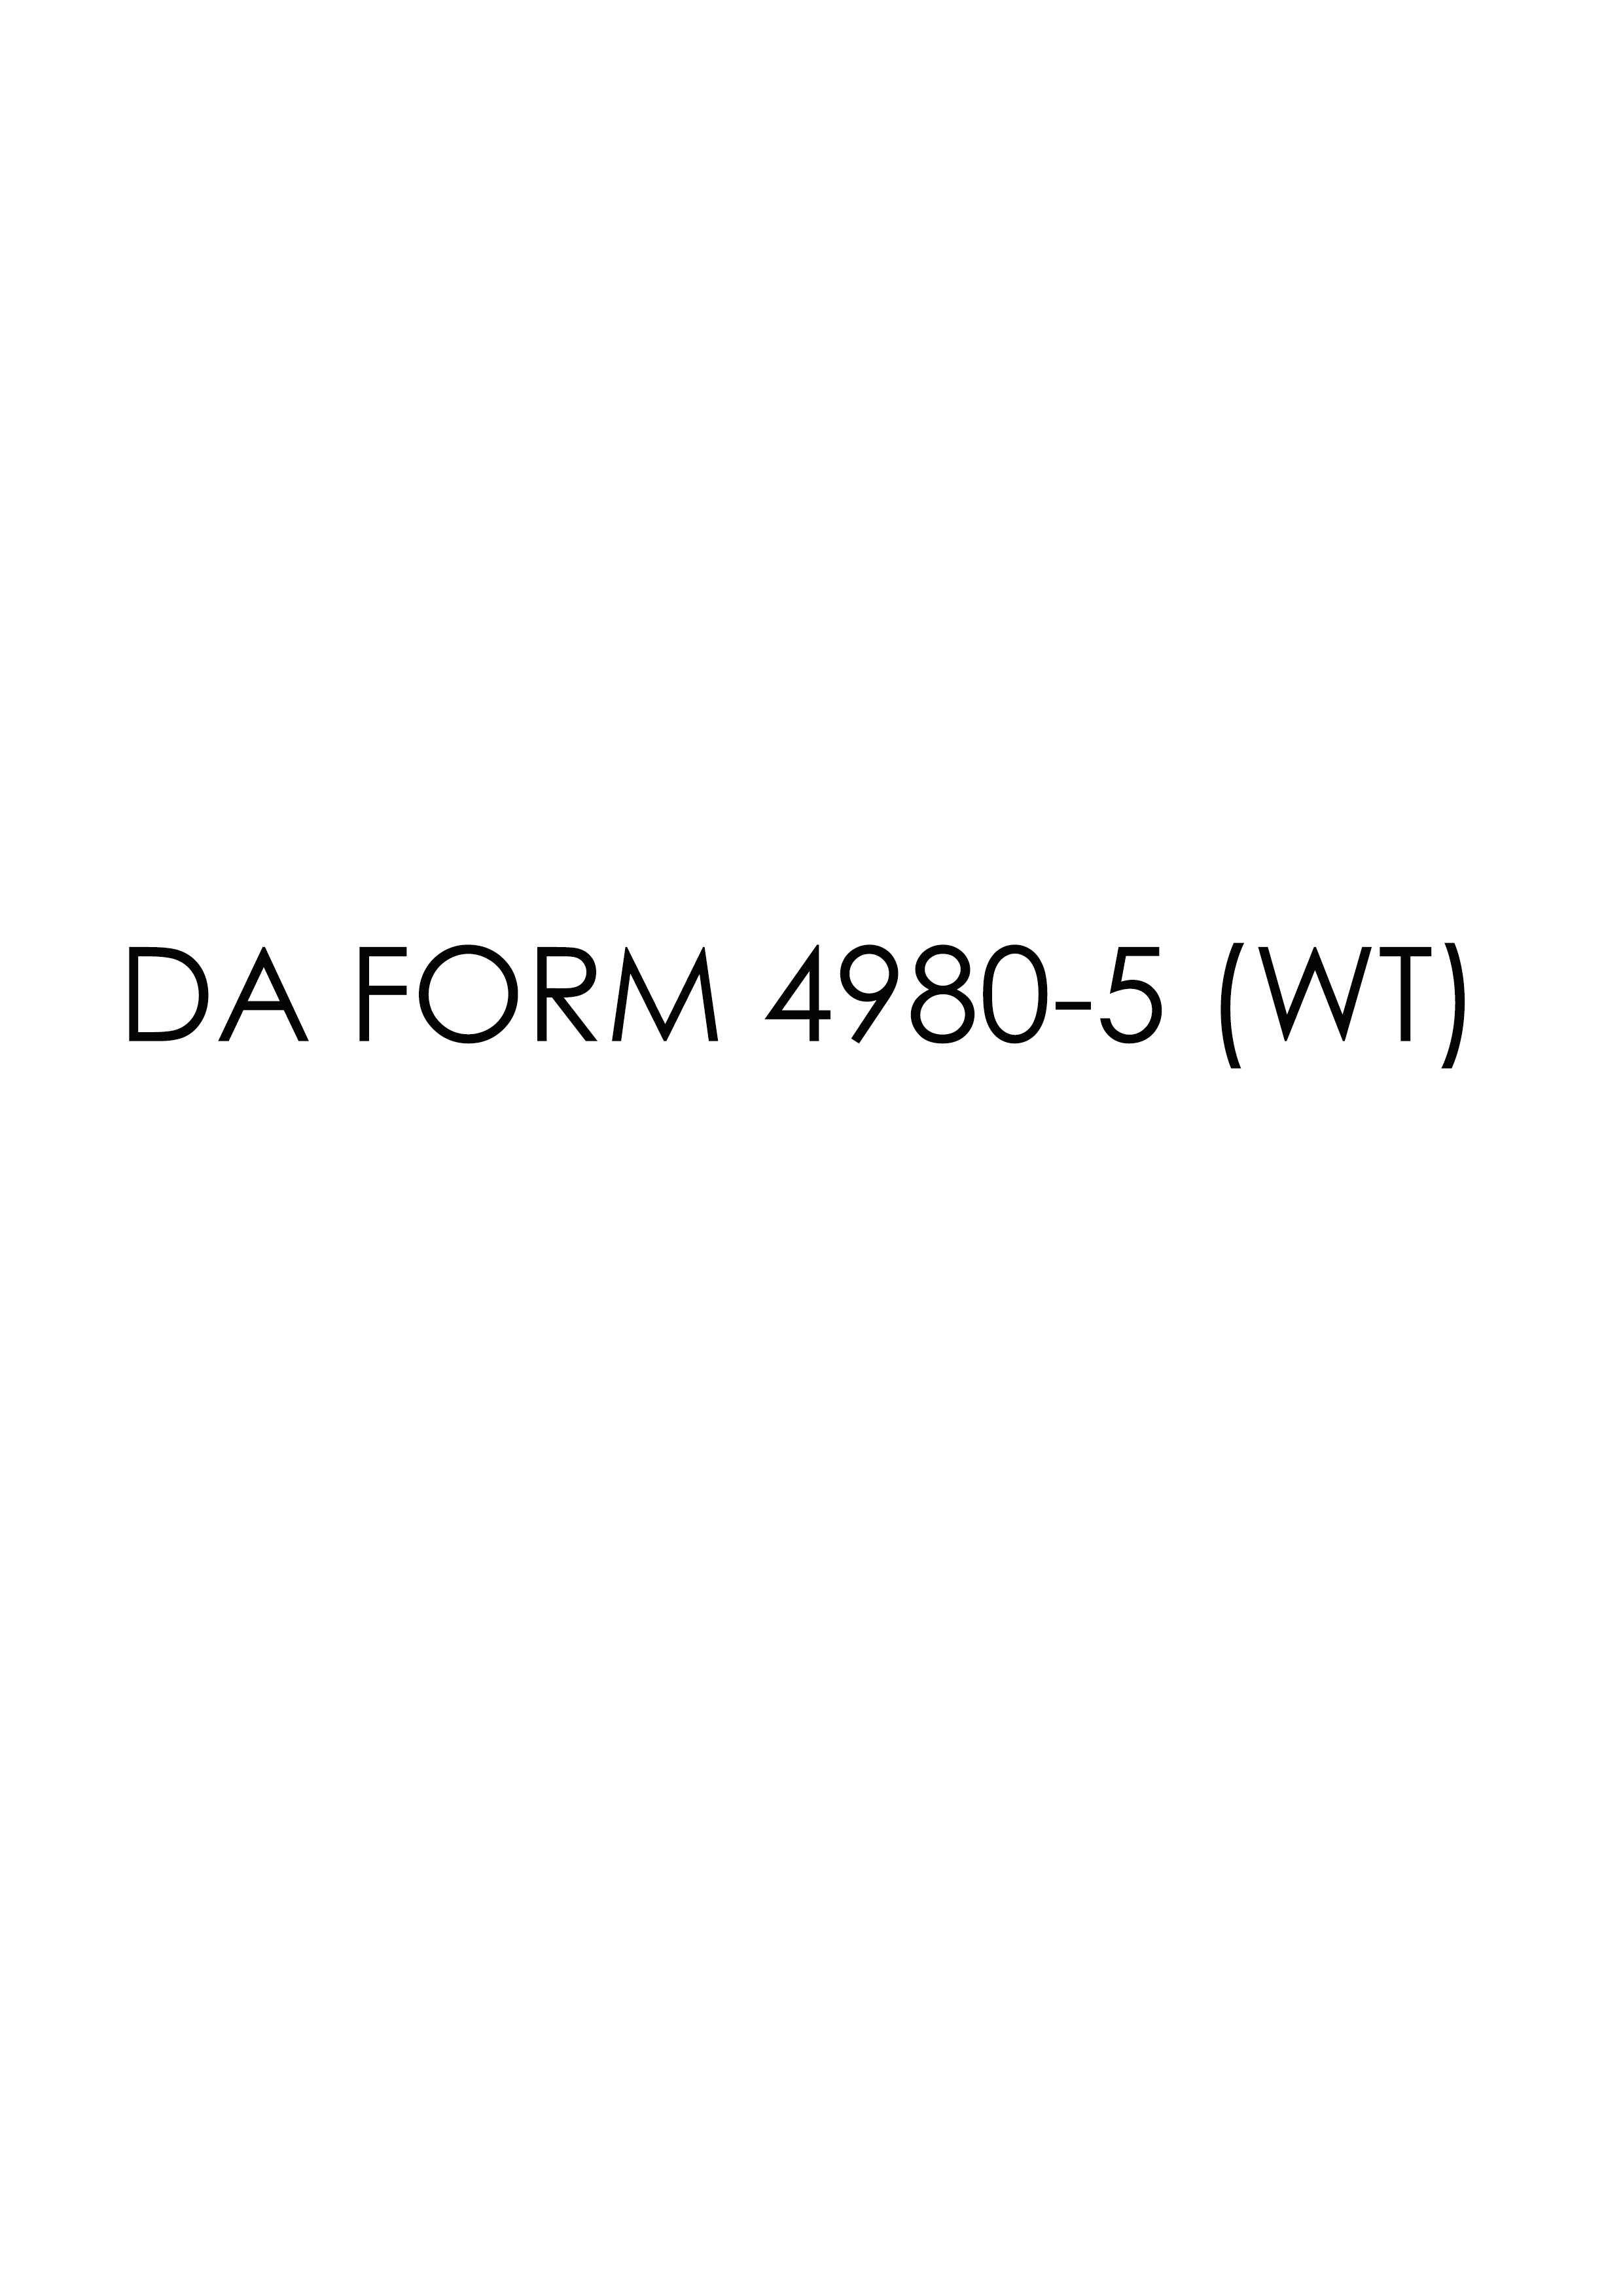 da Form 4980-5 (WT) fillable